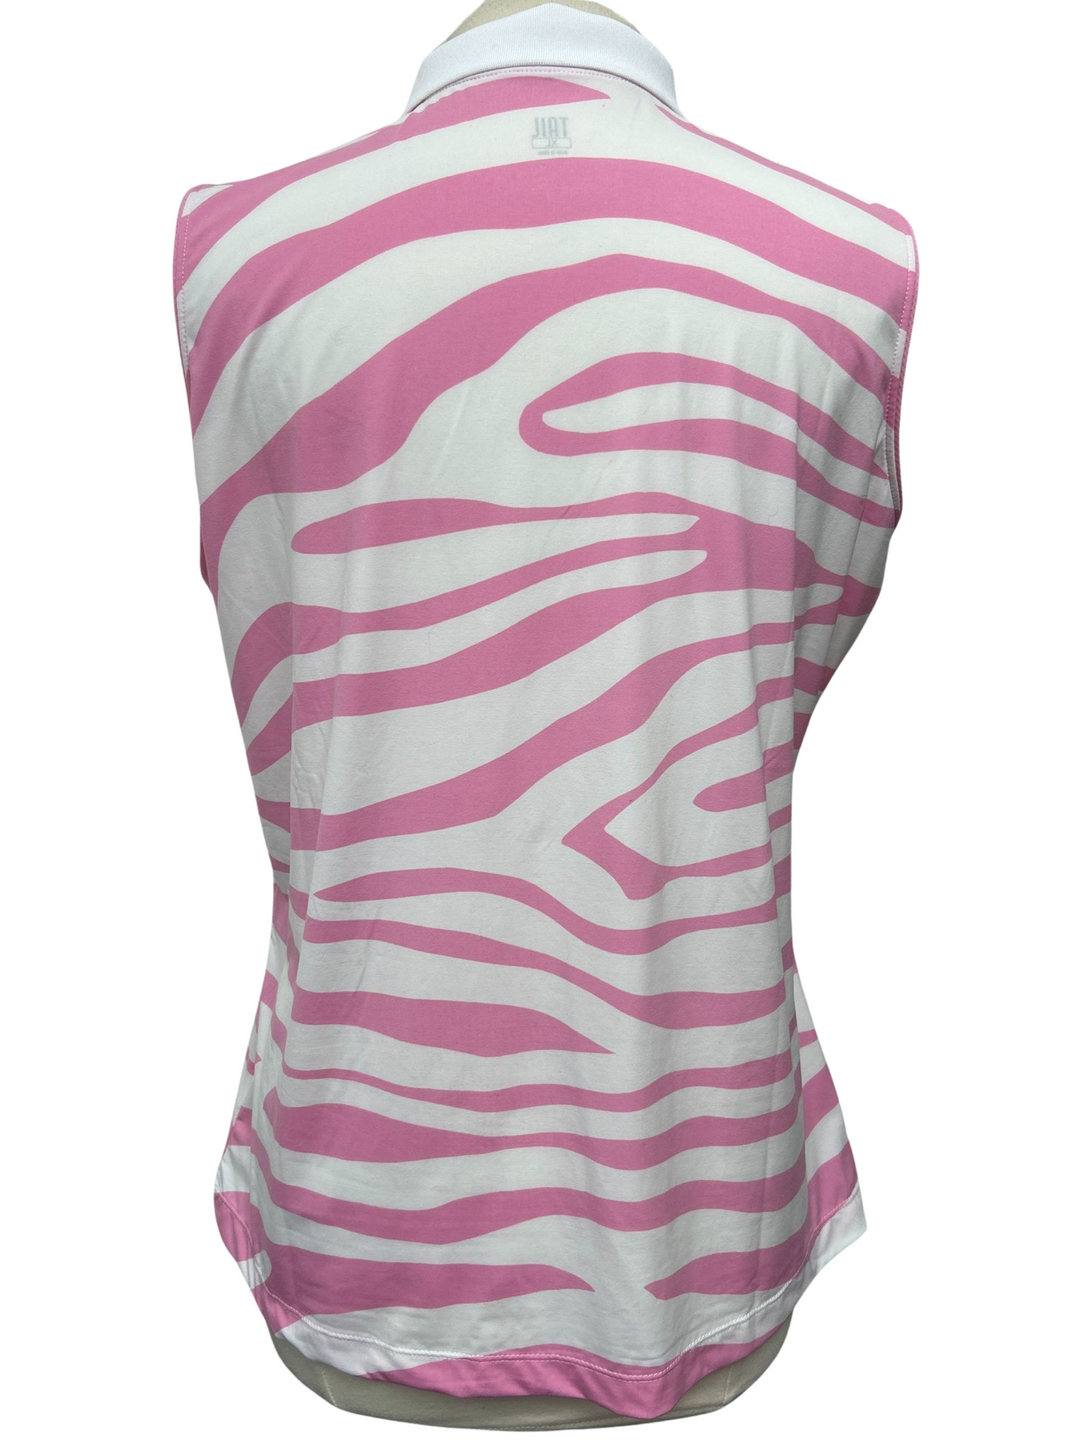 TAIL -Sleeveless Shirt - White and Pink -XL - Skorzie